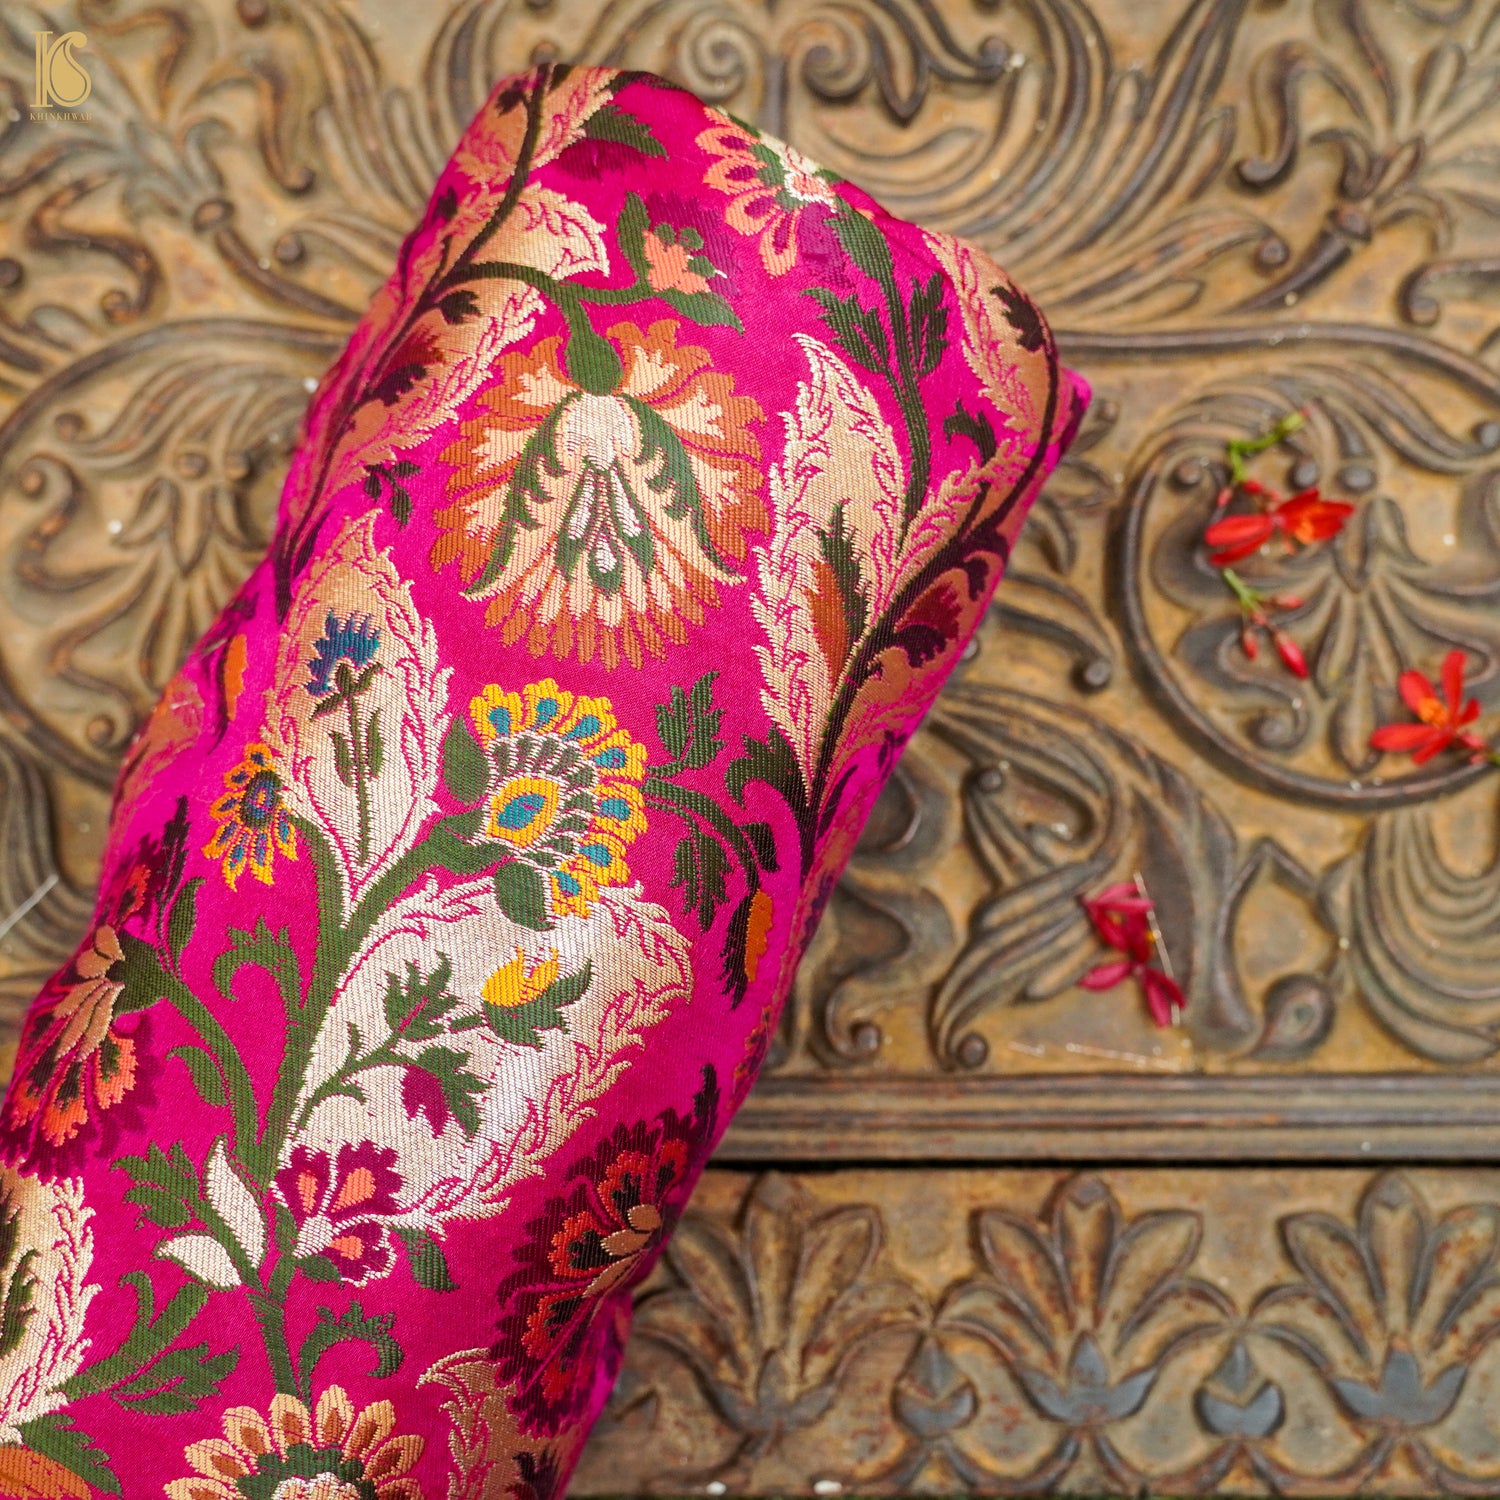 Razzmatazz Pink Kinkhab / Kimkhab Brocade Banarasi Fabric - Khinkhwab